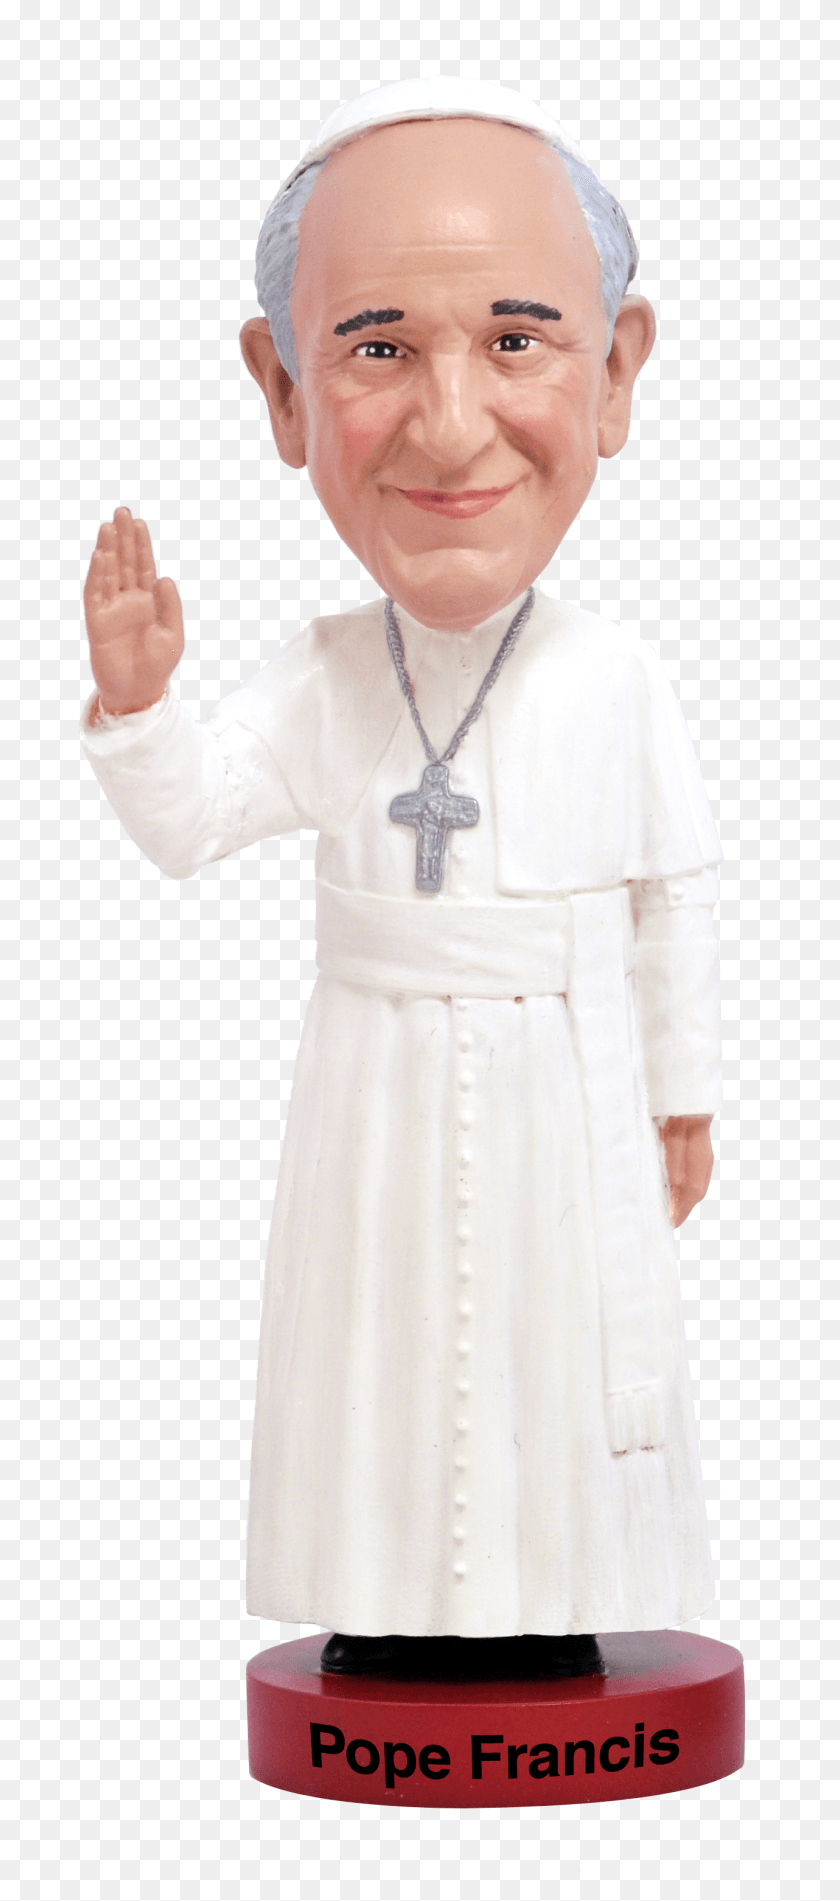 1282x3027 El Papa Francisco El Papa Francisco Bobble Head, Persona, Humano, Ropa Hd Png